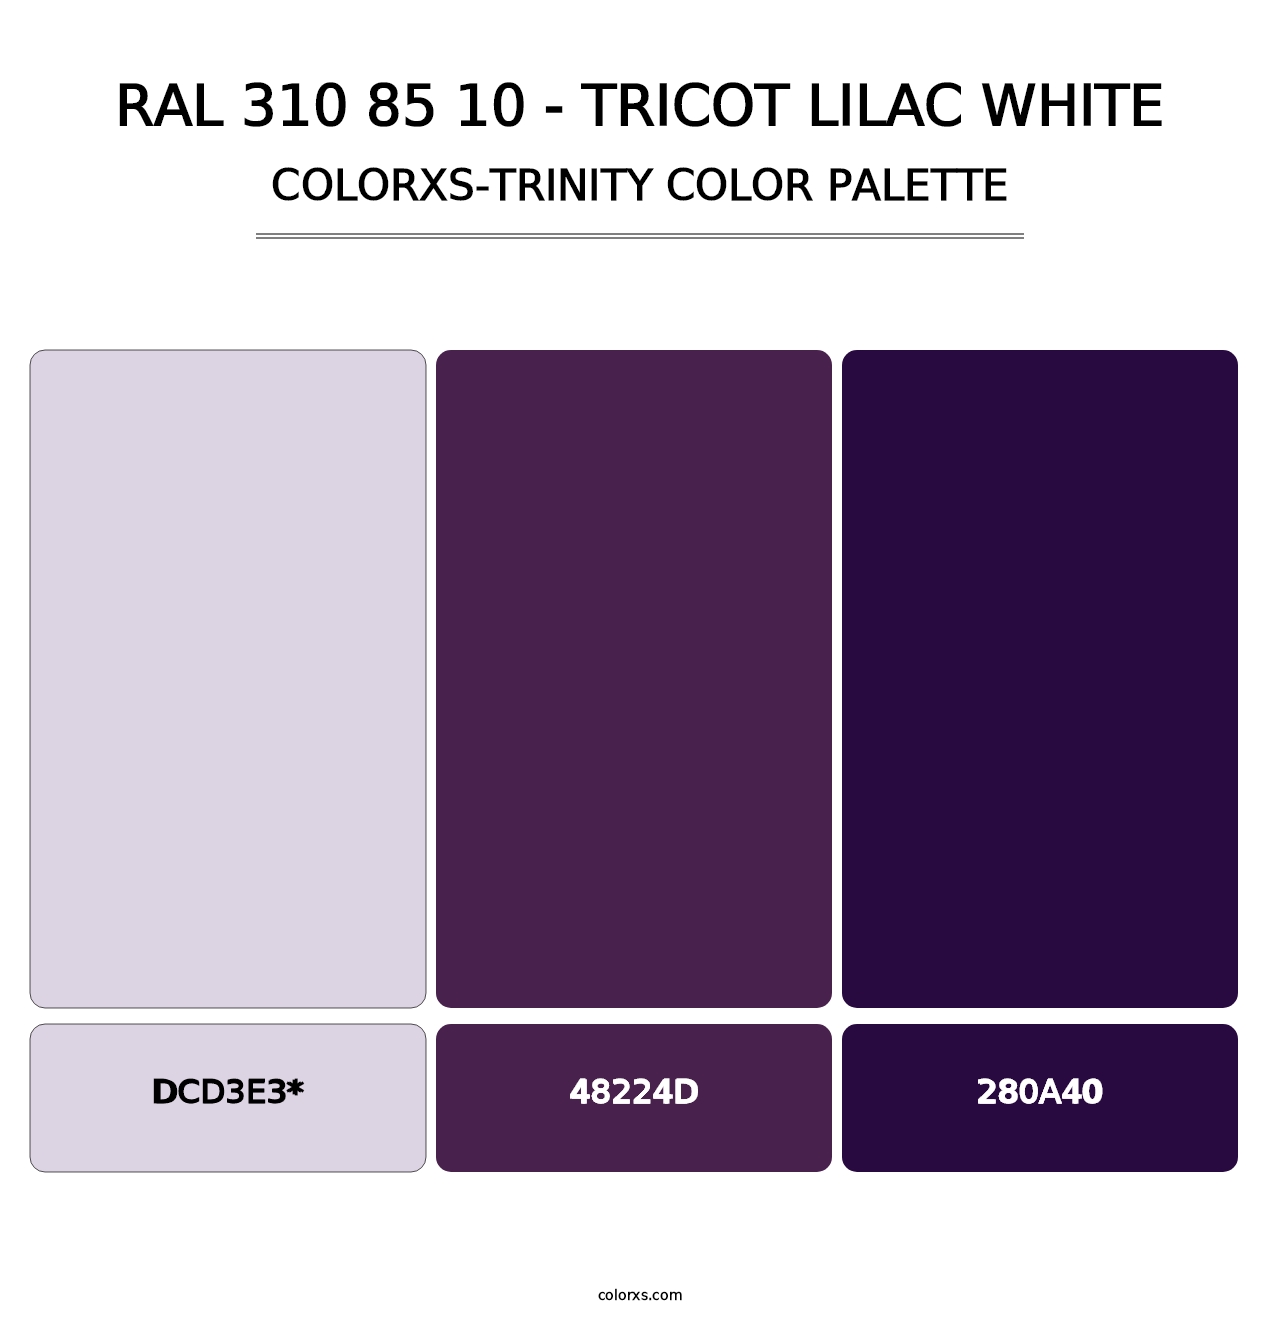 RAL 310 85 10 - Tricot Lilac White - Colorxs Trinity Palette